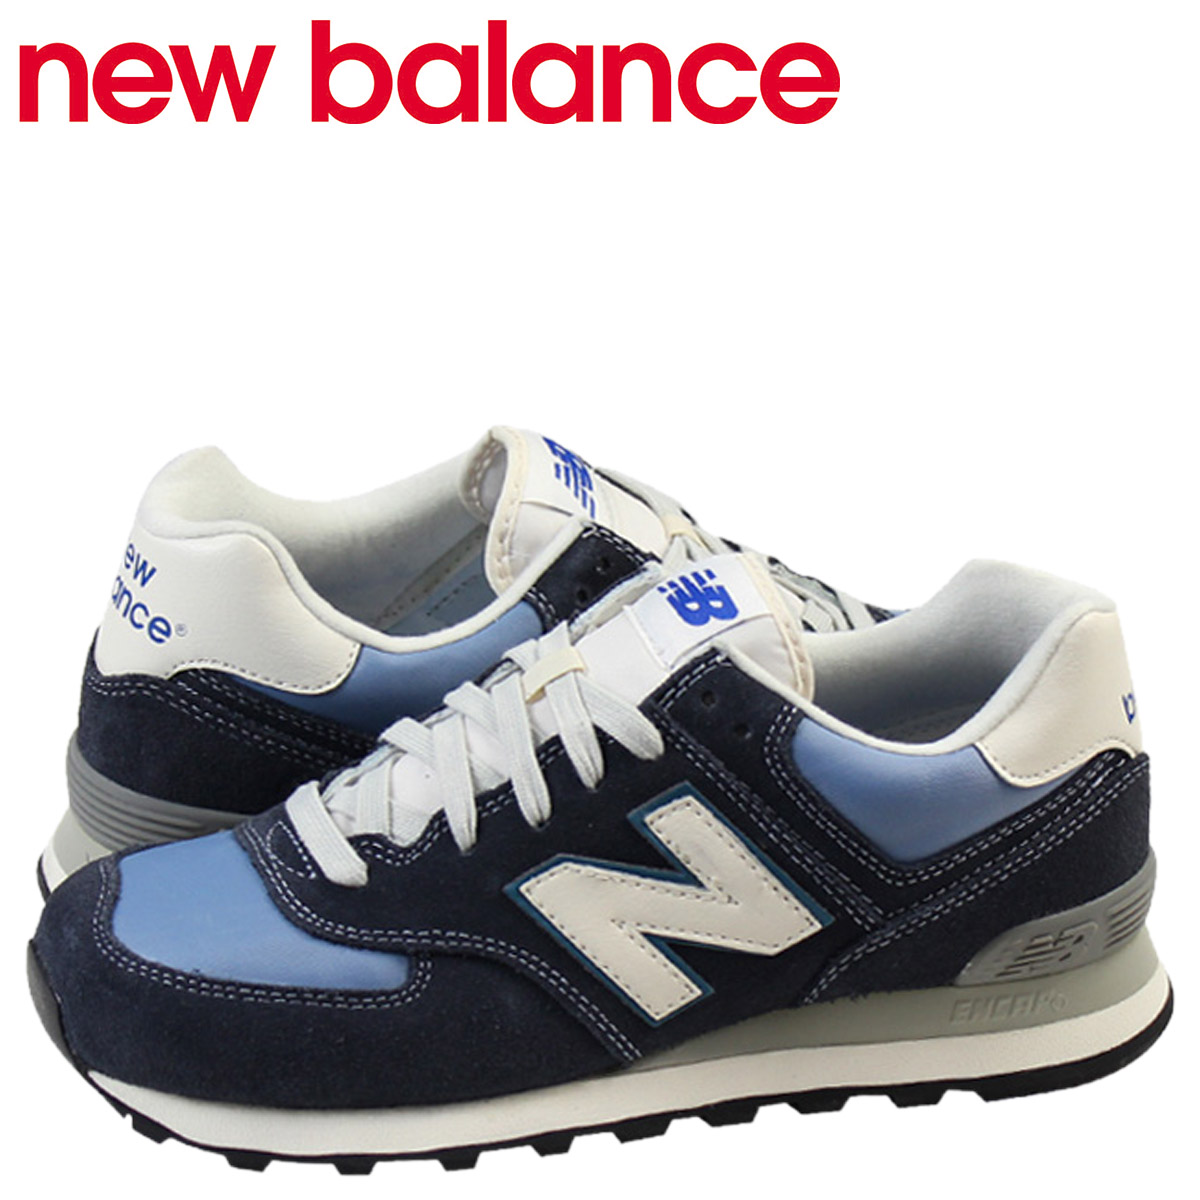 new balance mens shoes 574